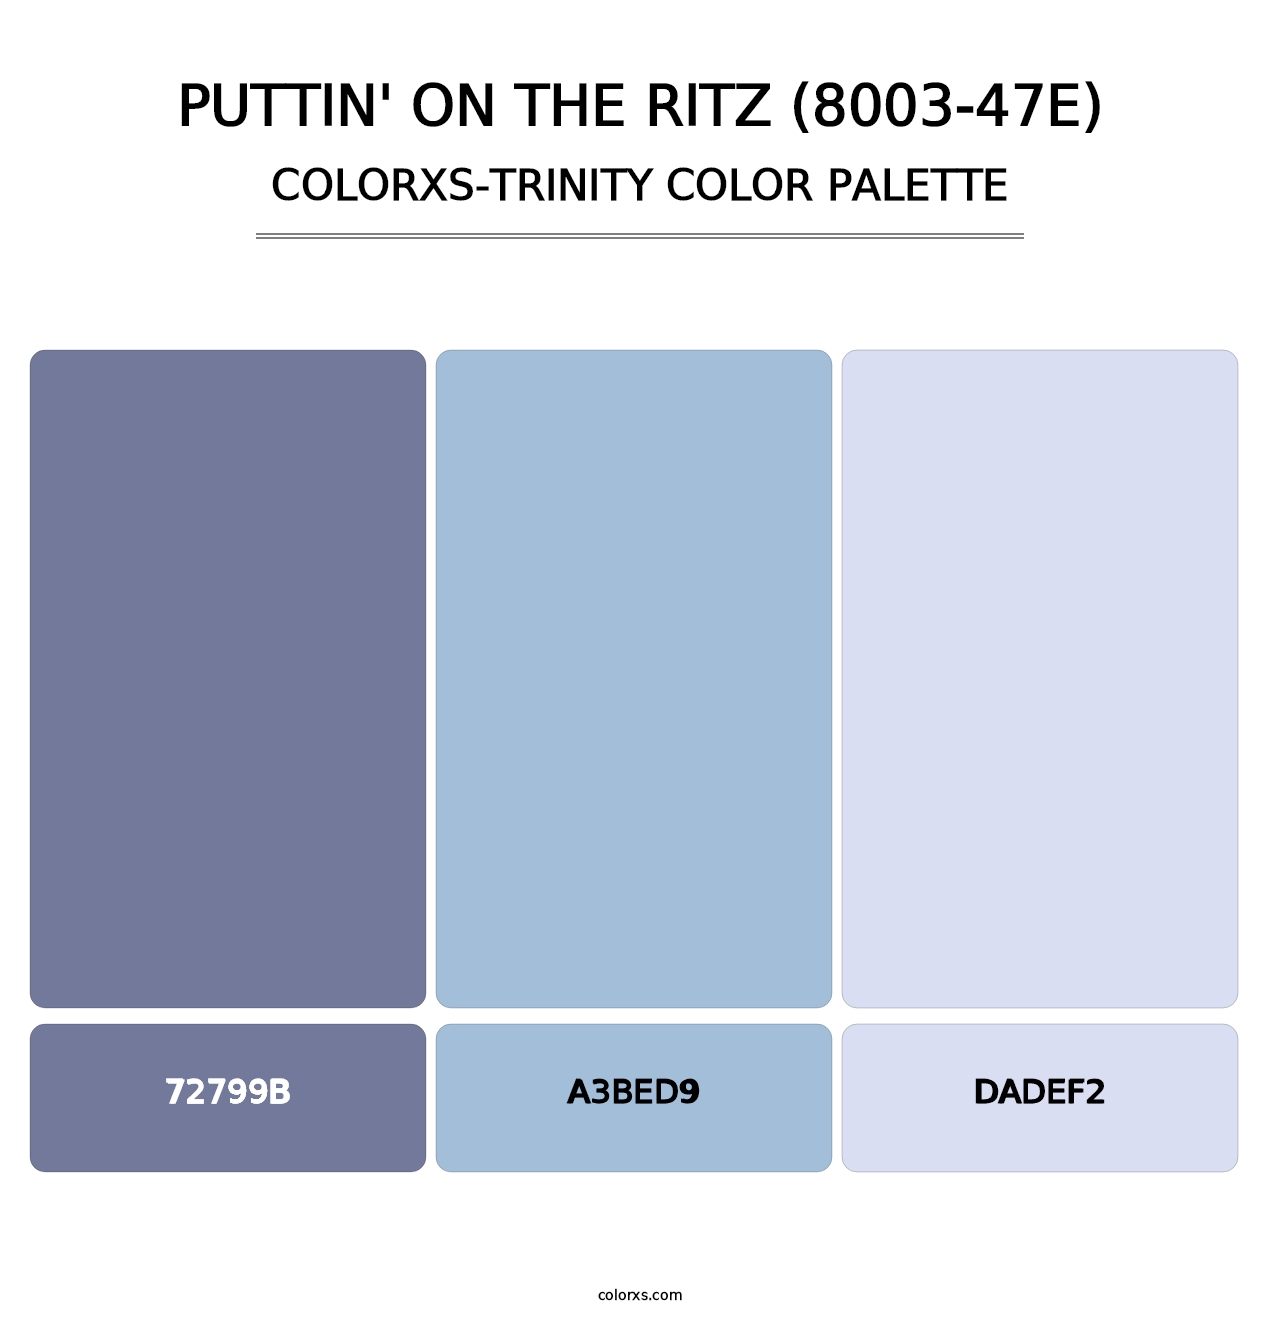 Puttin' on the Ritz (8003-47E) - Colorxs Trinity Palette